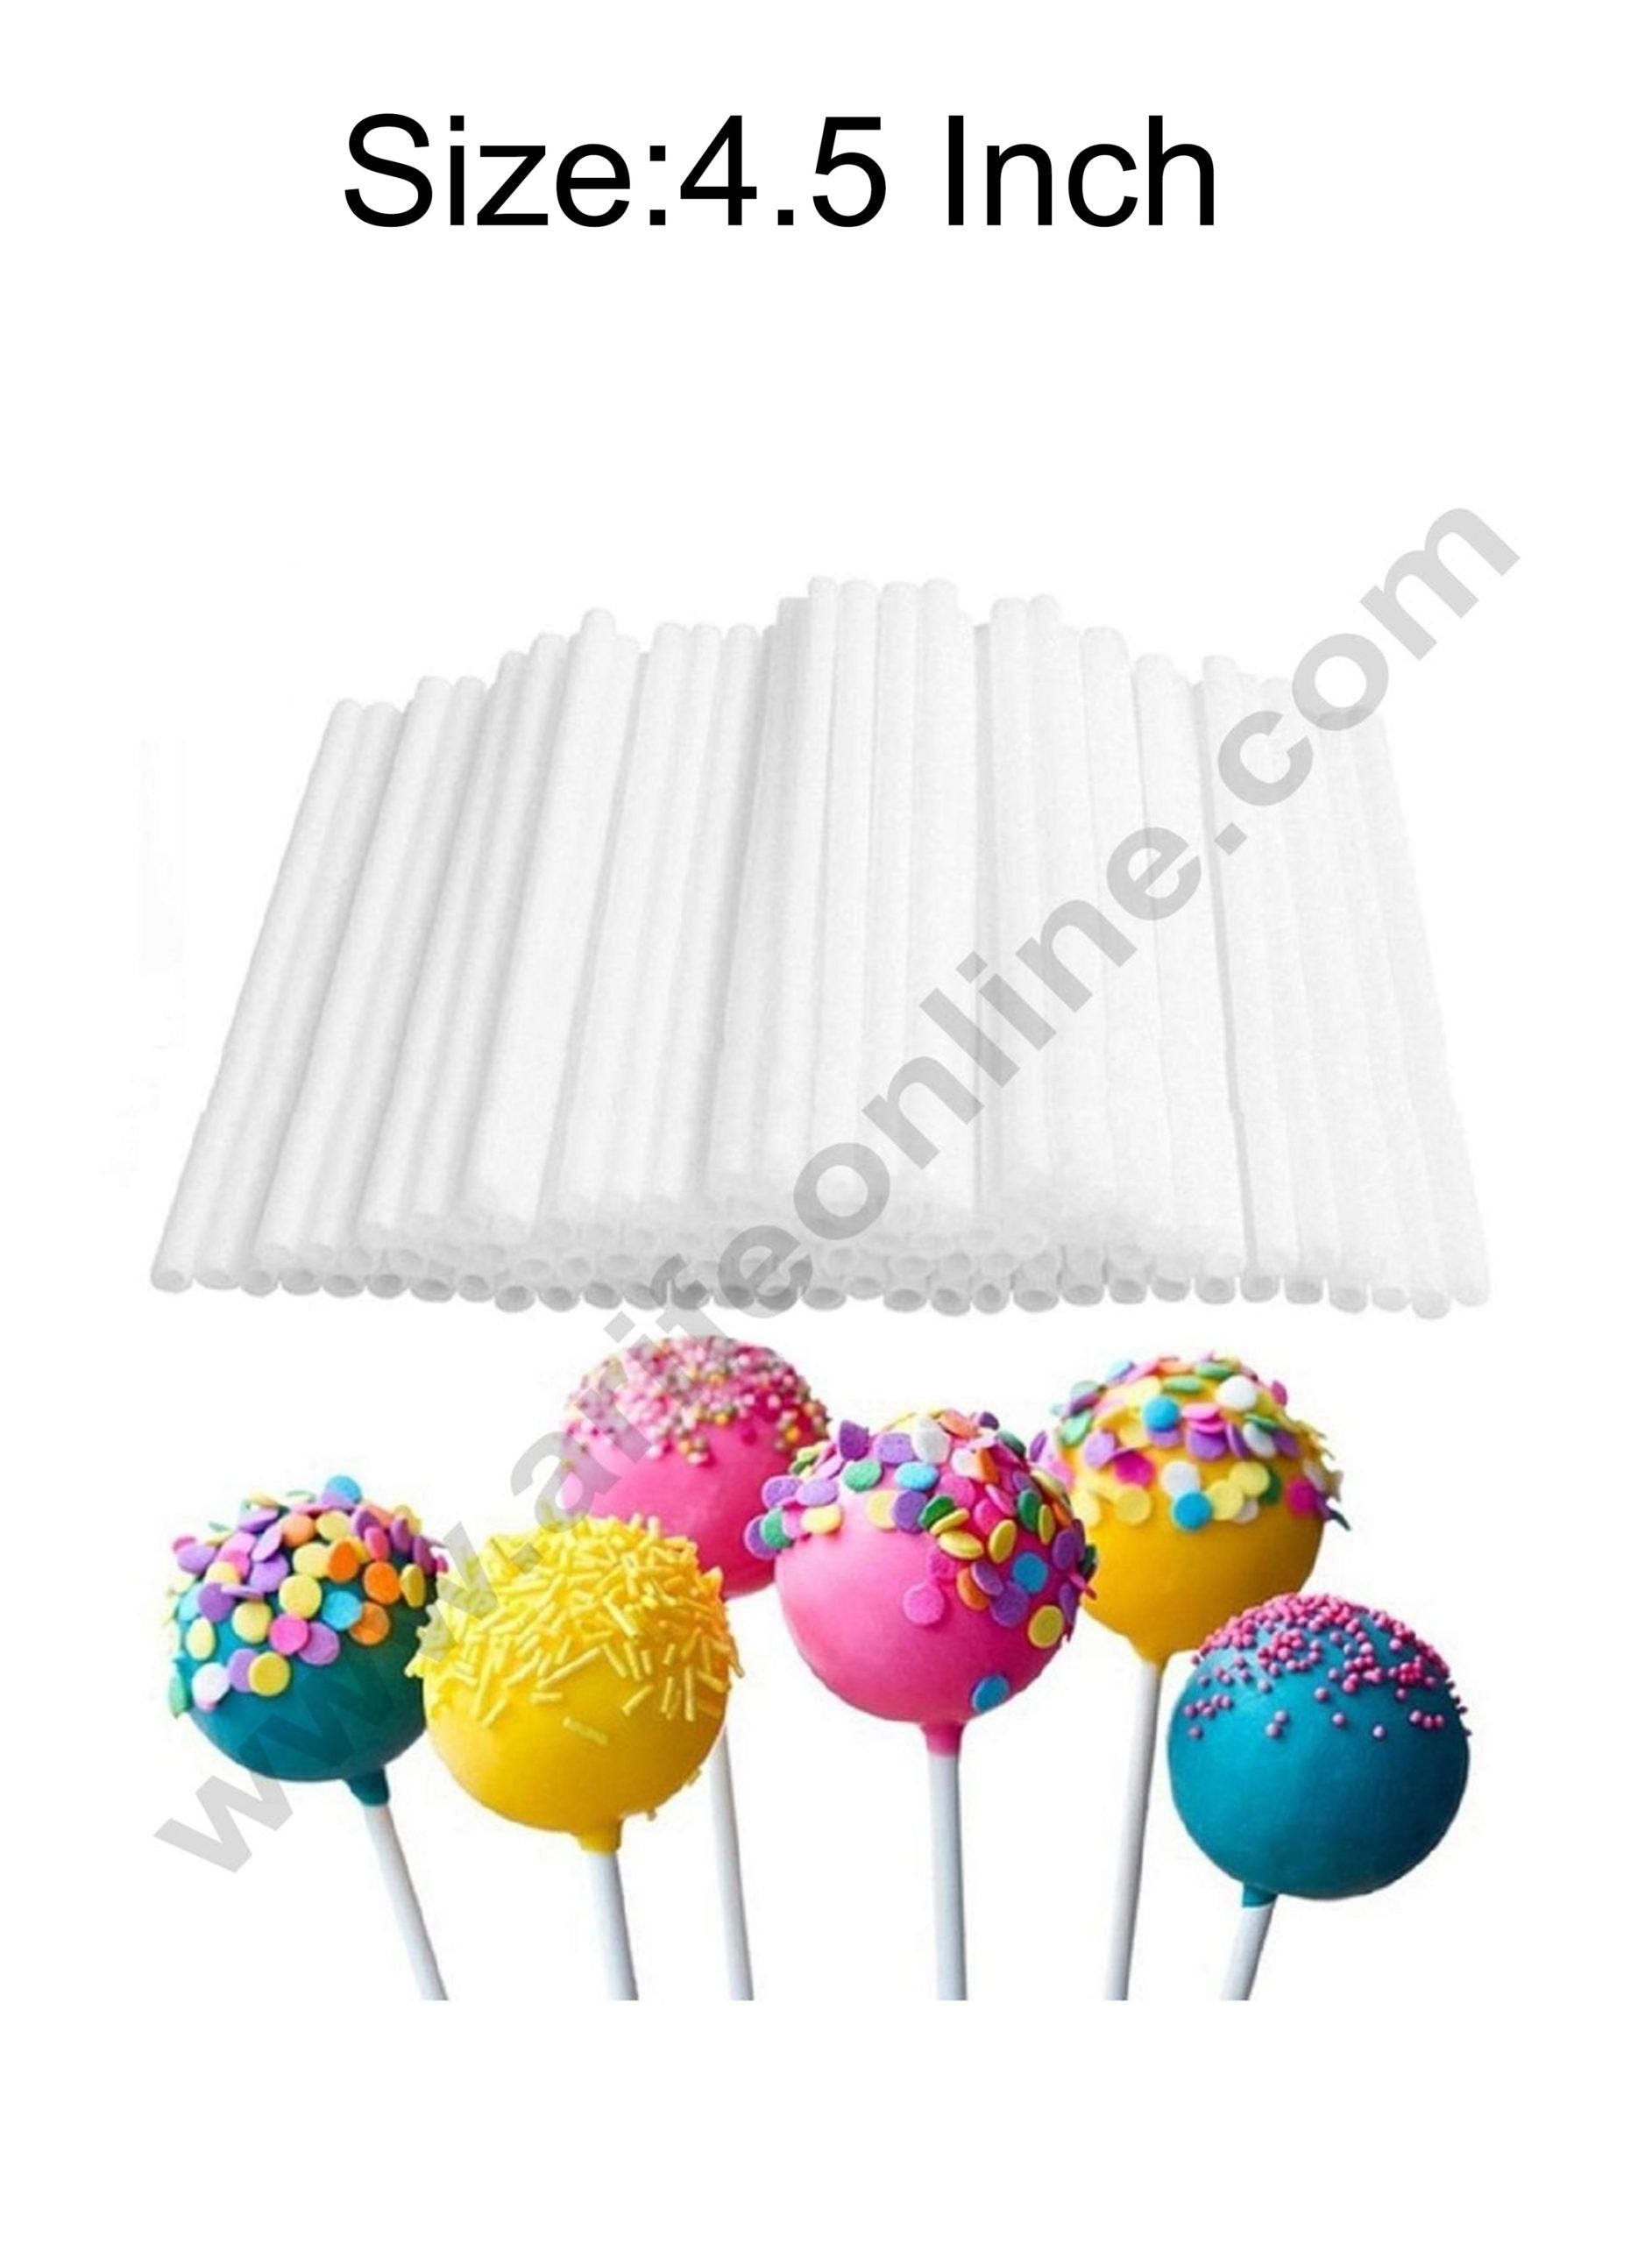 200 Pack Cake Pop Sticks 8 Inch for Lollipops, Cookies, Candy, Desserts -  Walmart.com